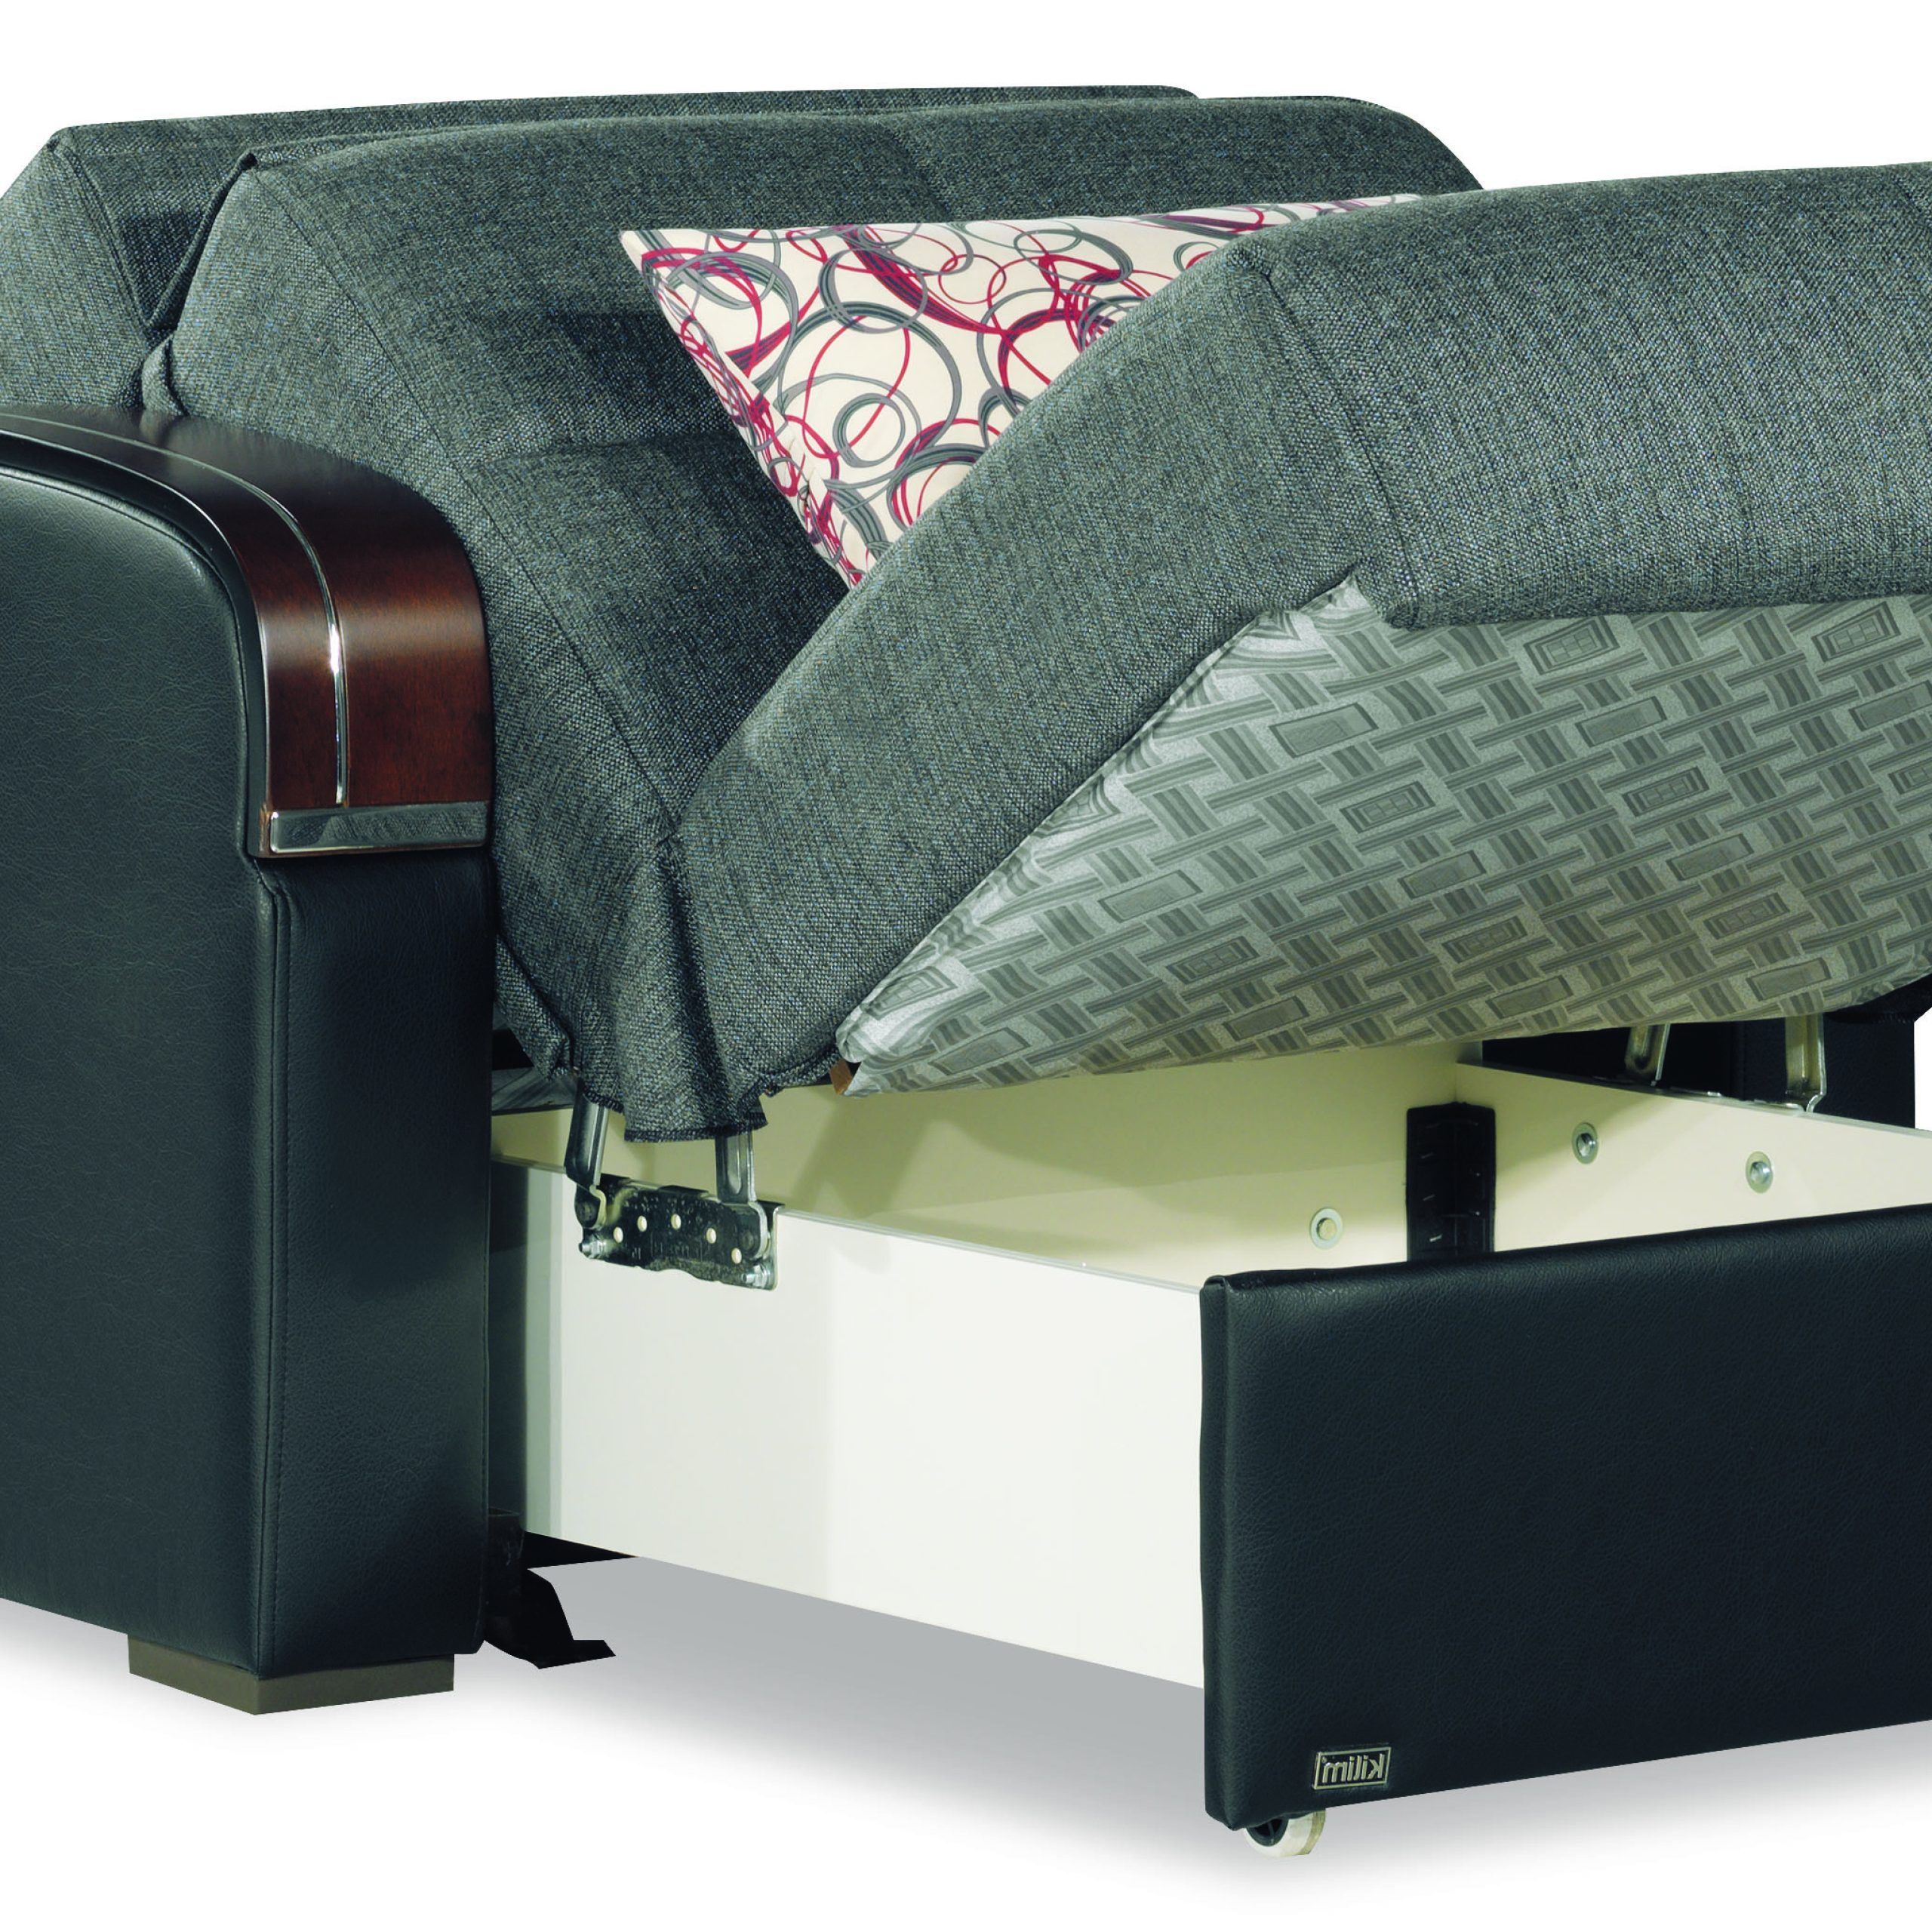 Sleep Plus Gray Convertible Chair Bedcasamode With Regard To 4 In 1 Convertible Sleeper Chair Beds (View 7 of 20)